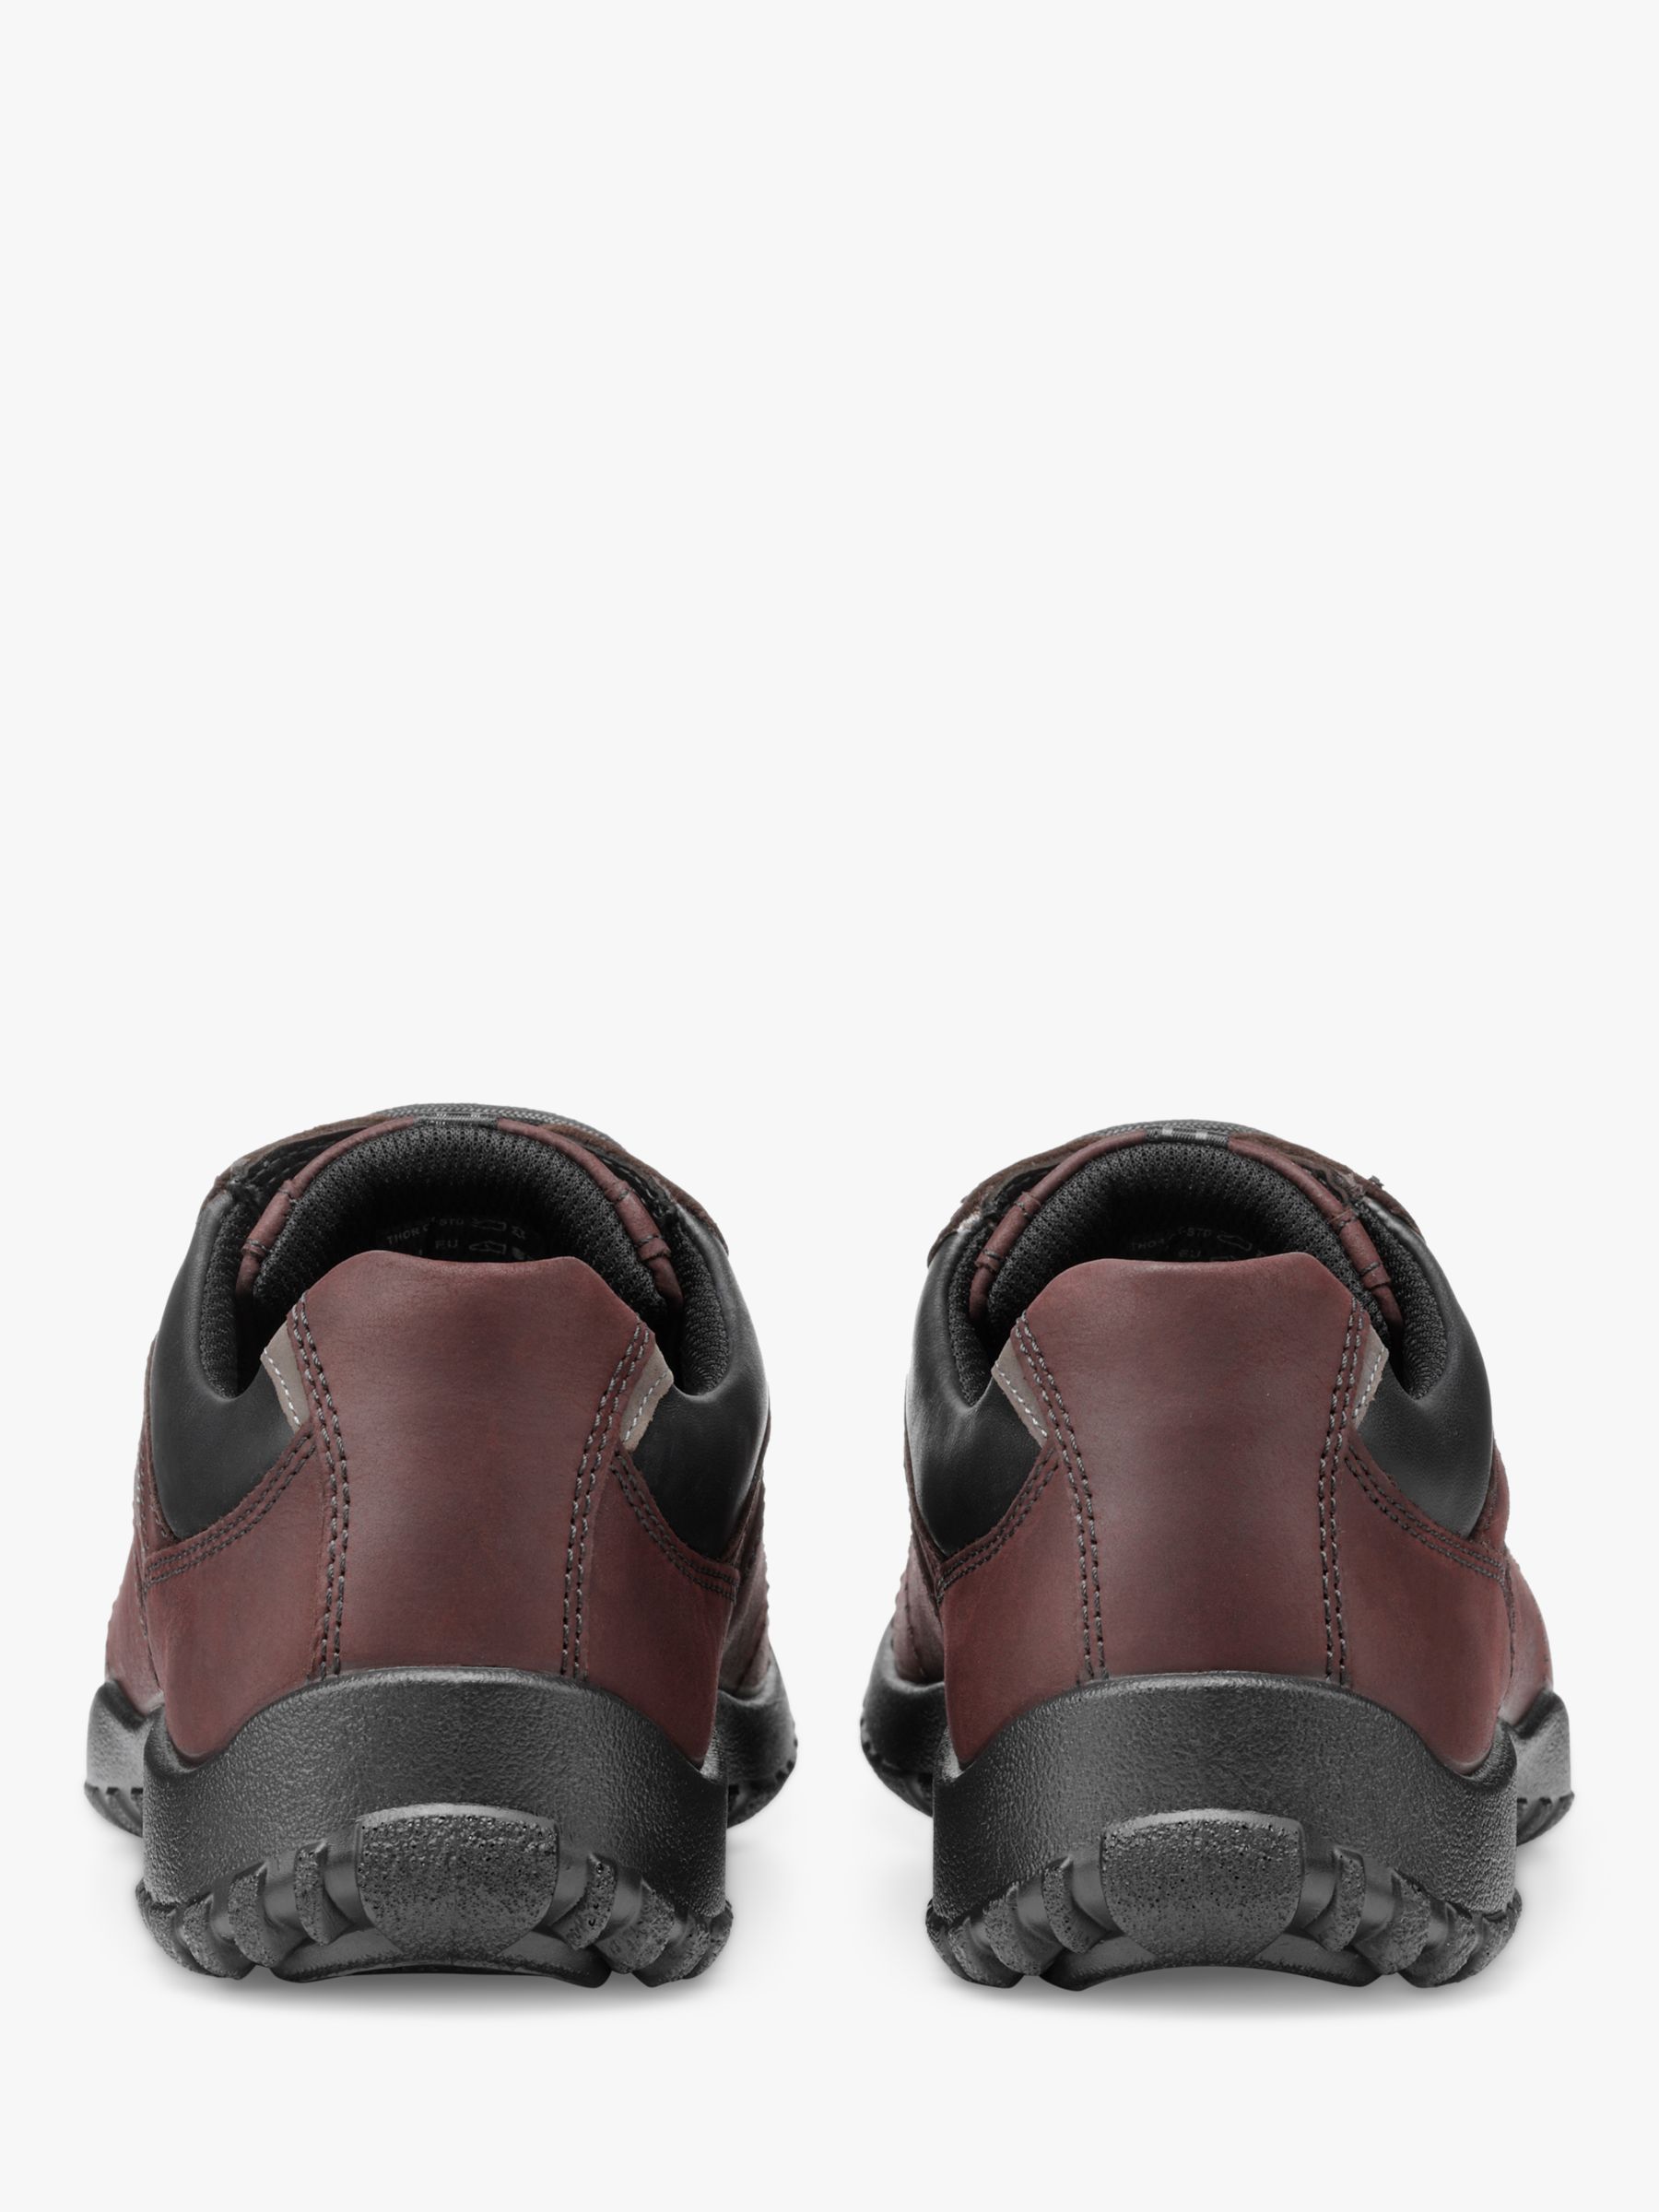 Hotter Thor II Waterproof Walking Shoes, Chocolate, 6S